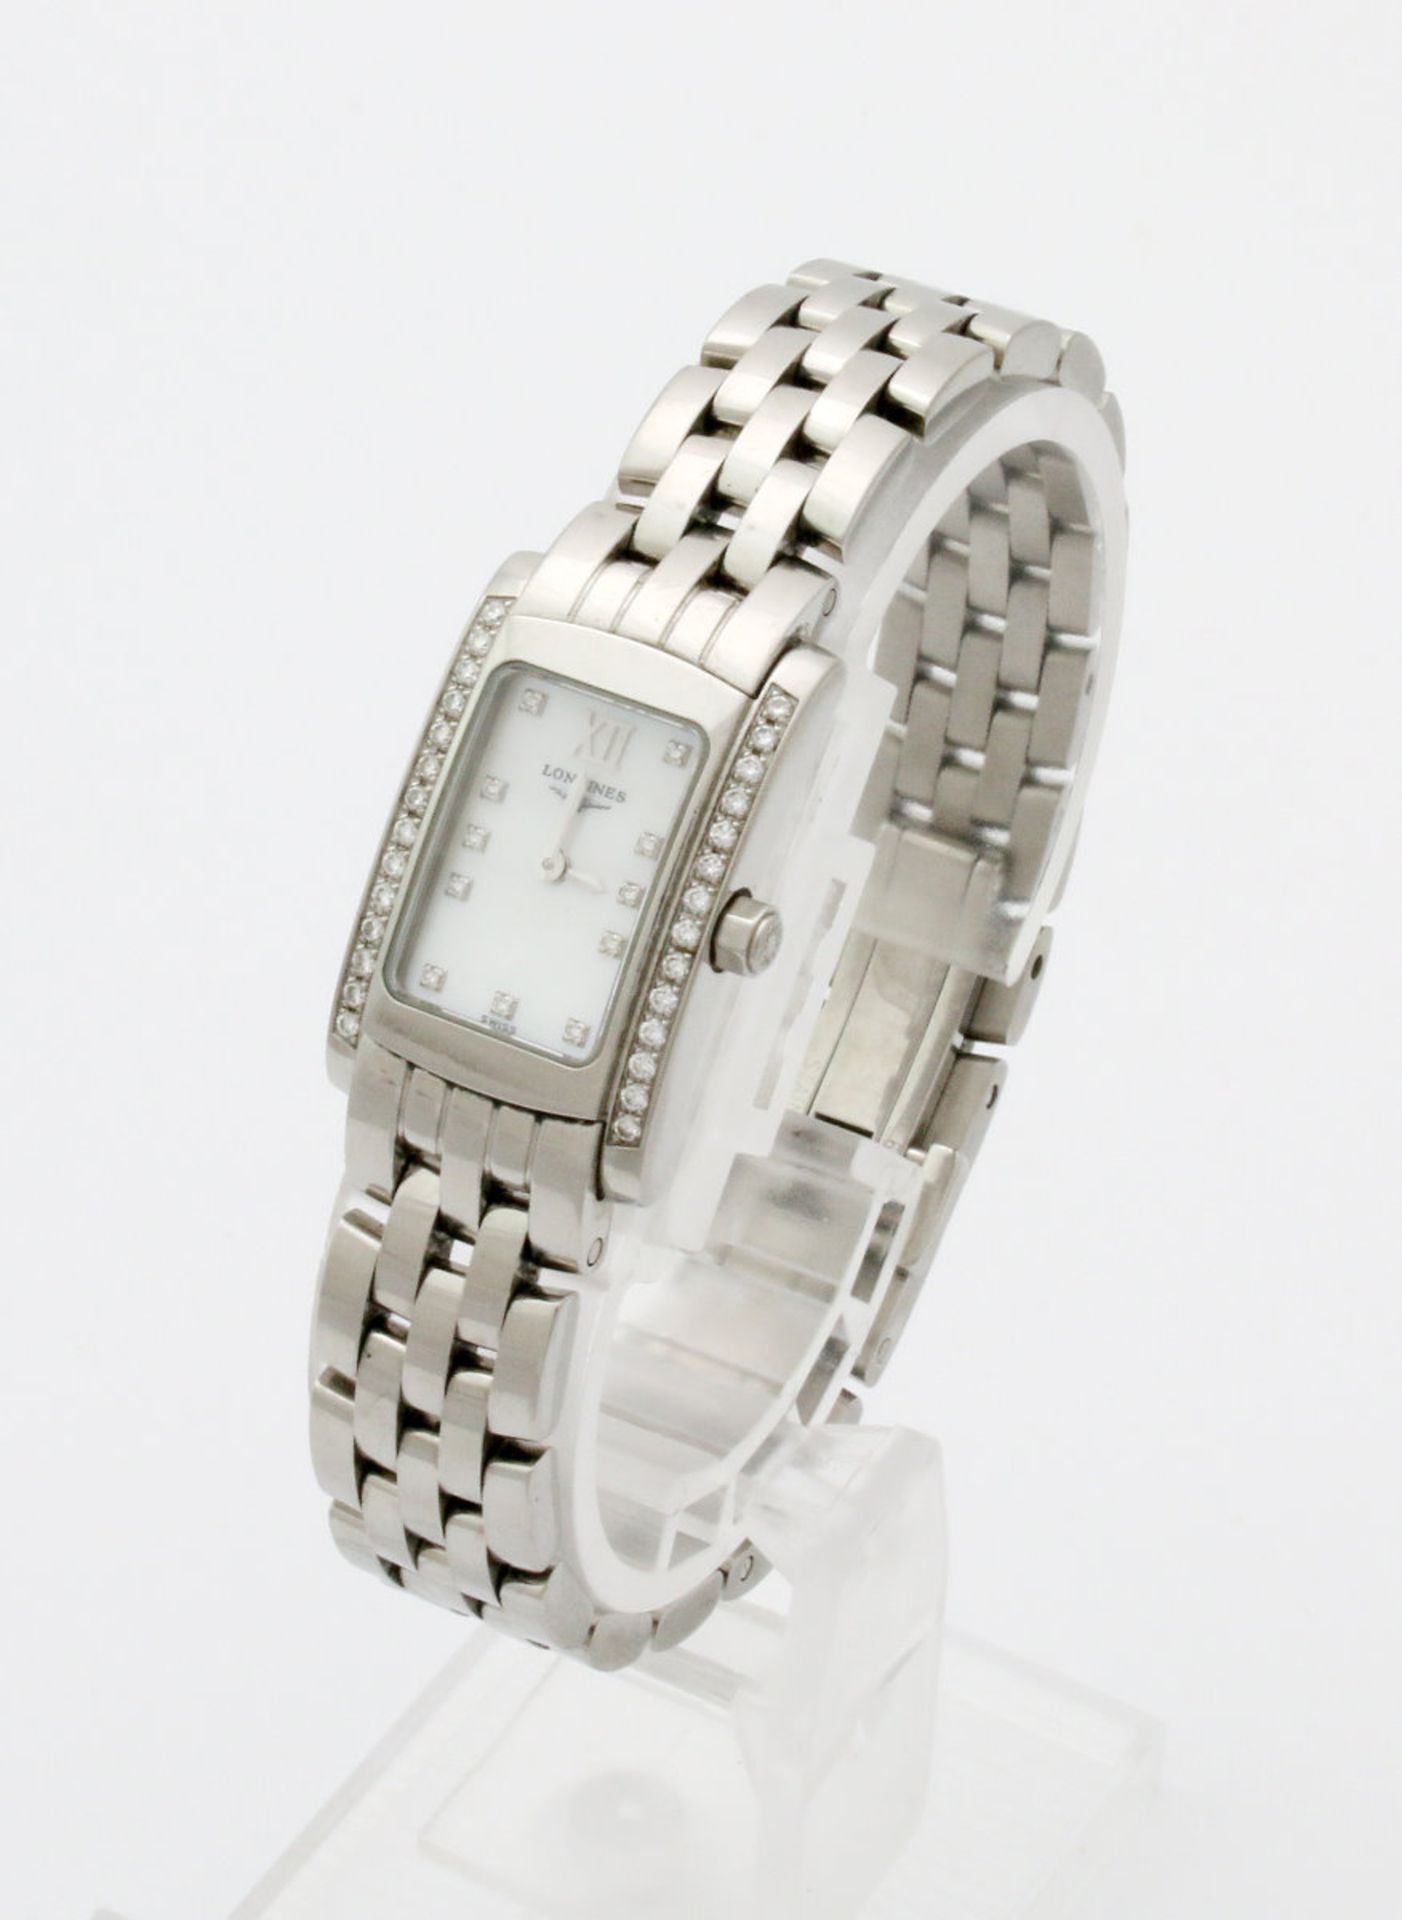 Armbanduhr Longines "Dolce Vita" mit Brillanten Quarzwerk, Edelstahlgehäuse, Maße: 27 x 16 mm, - Image 5 of 7